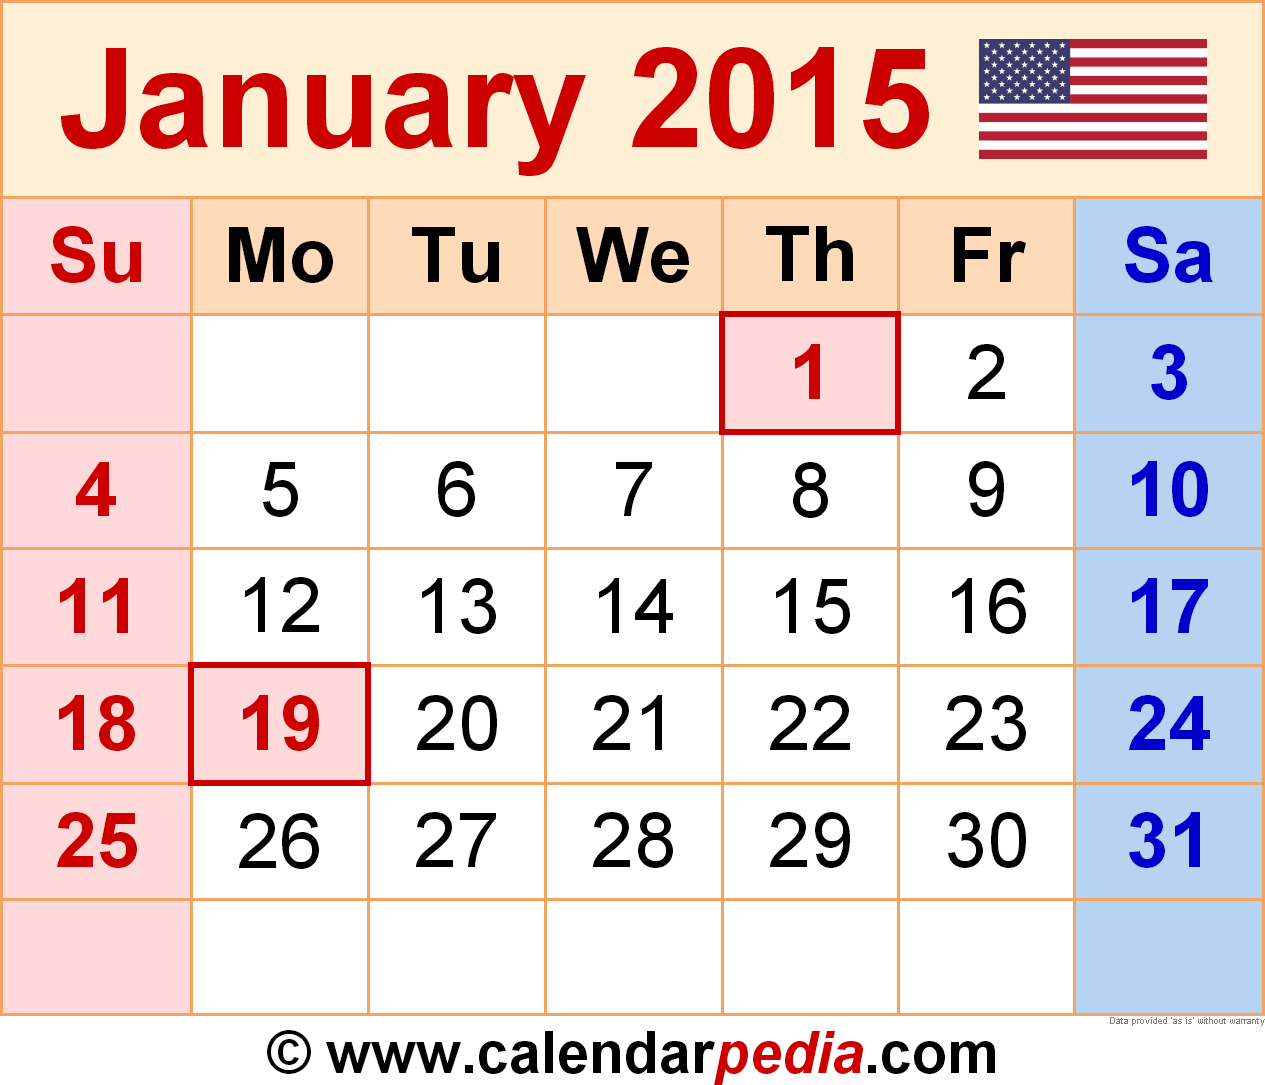 December 2014 January 2015 Calendar   New Calendar Template Site